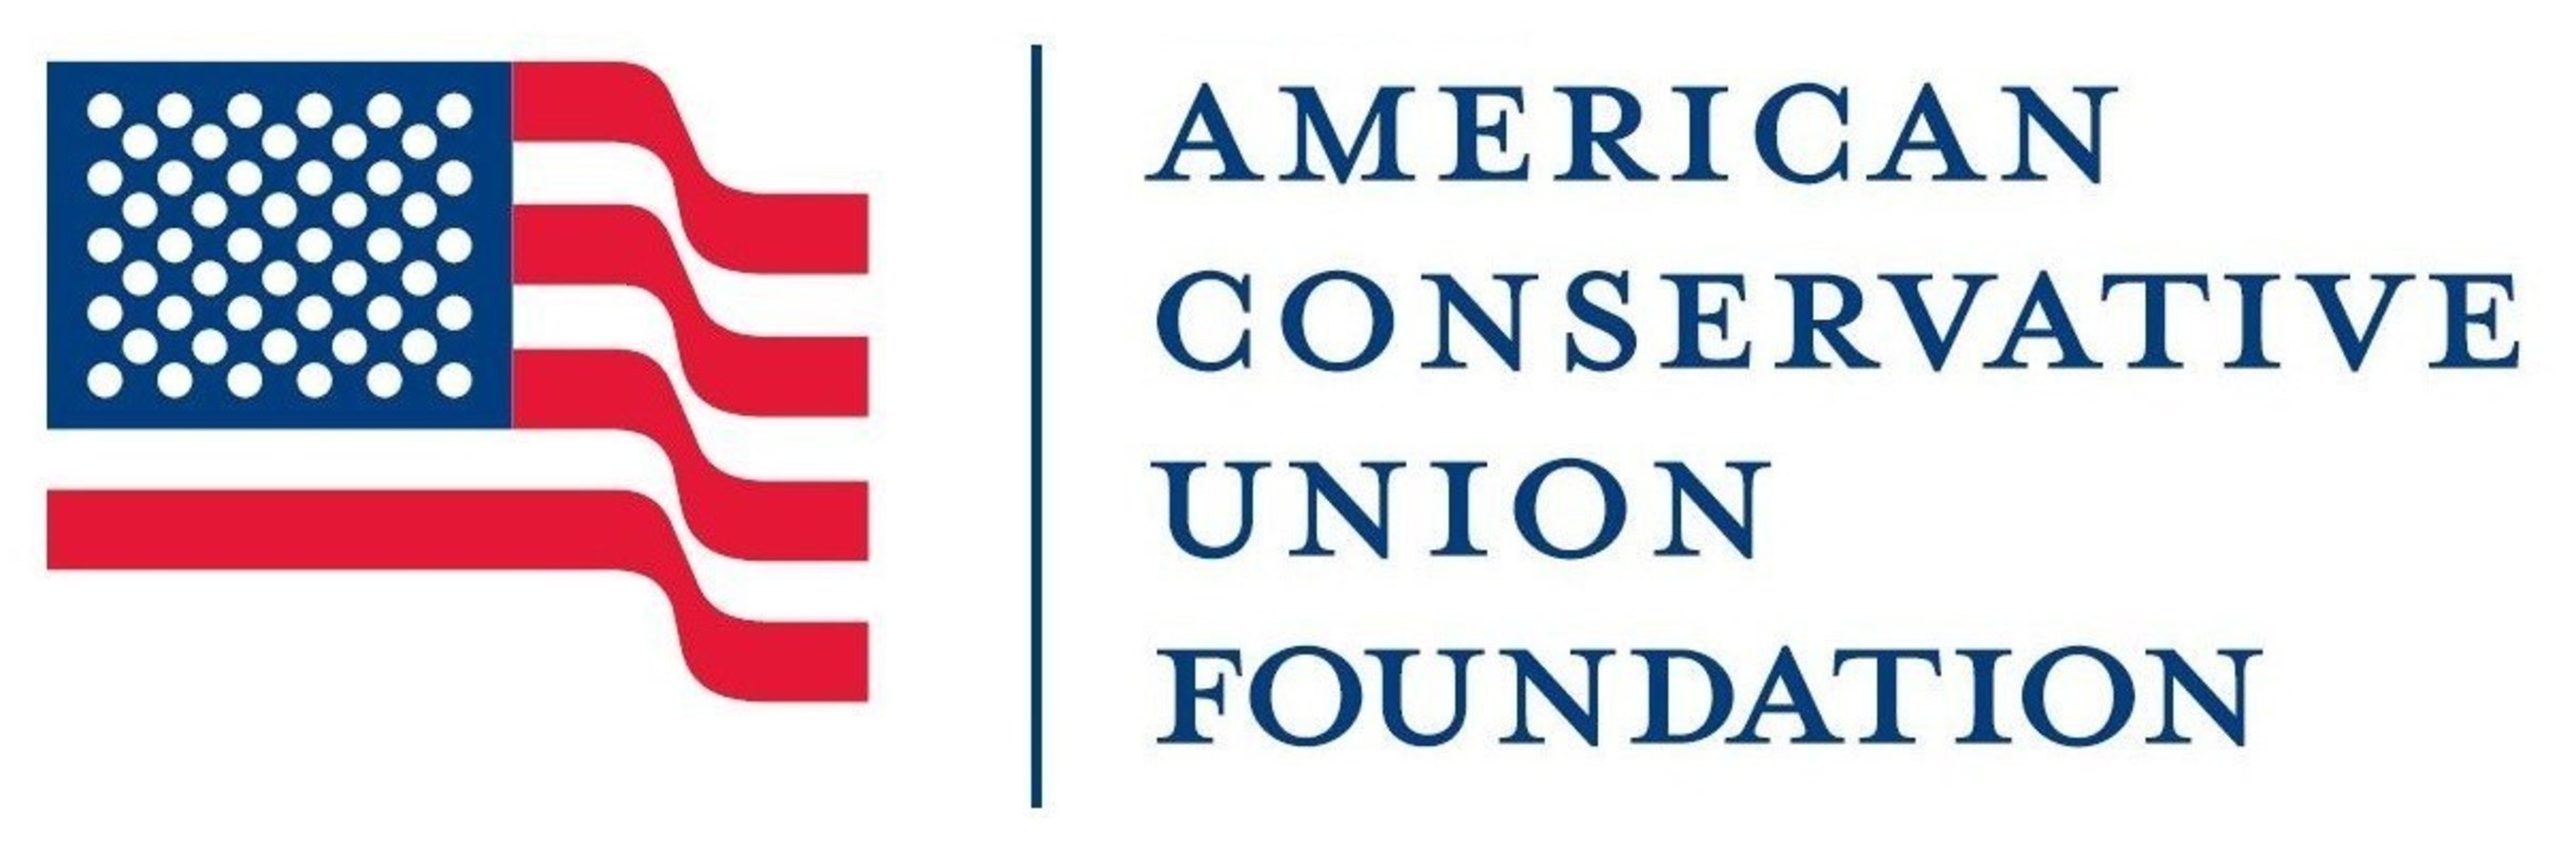 American Conservative Union Foundation logo